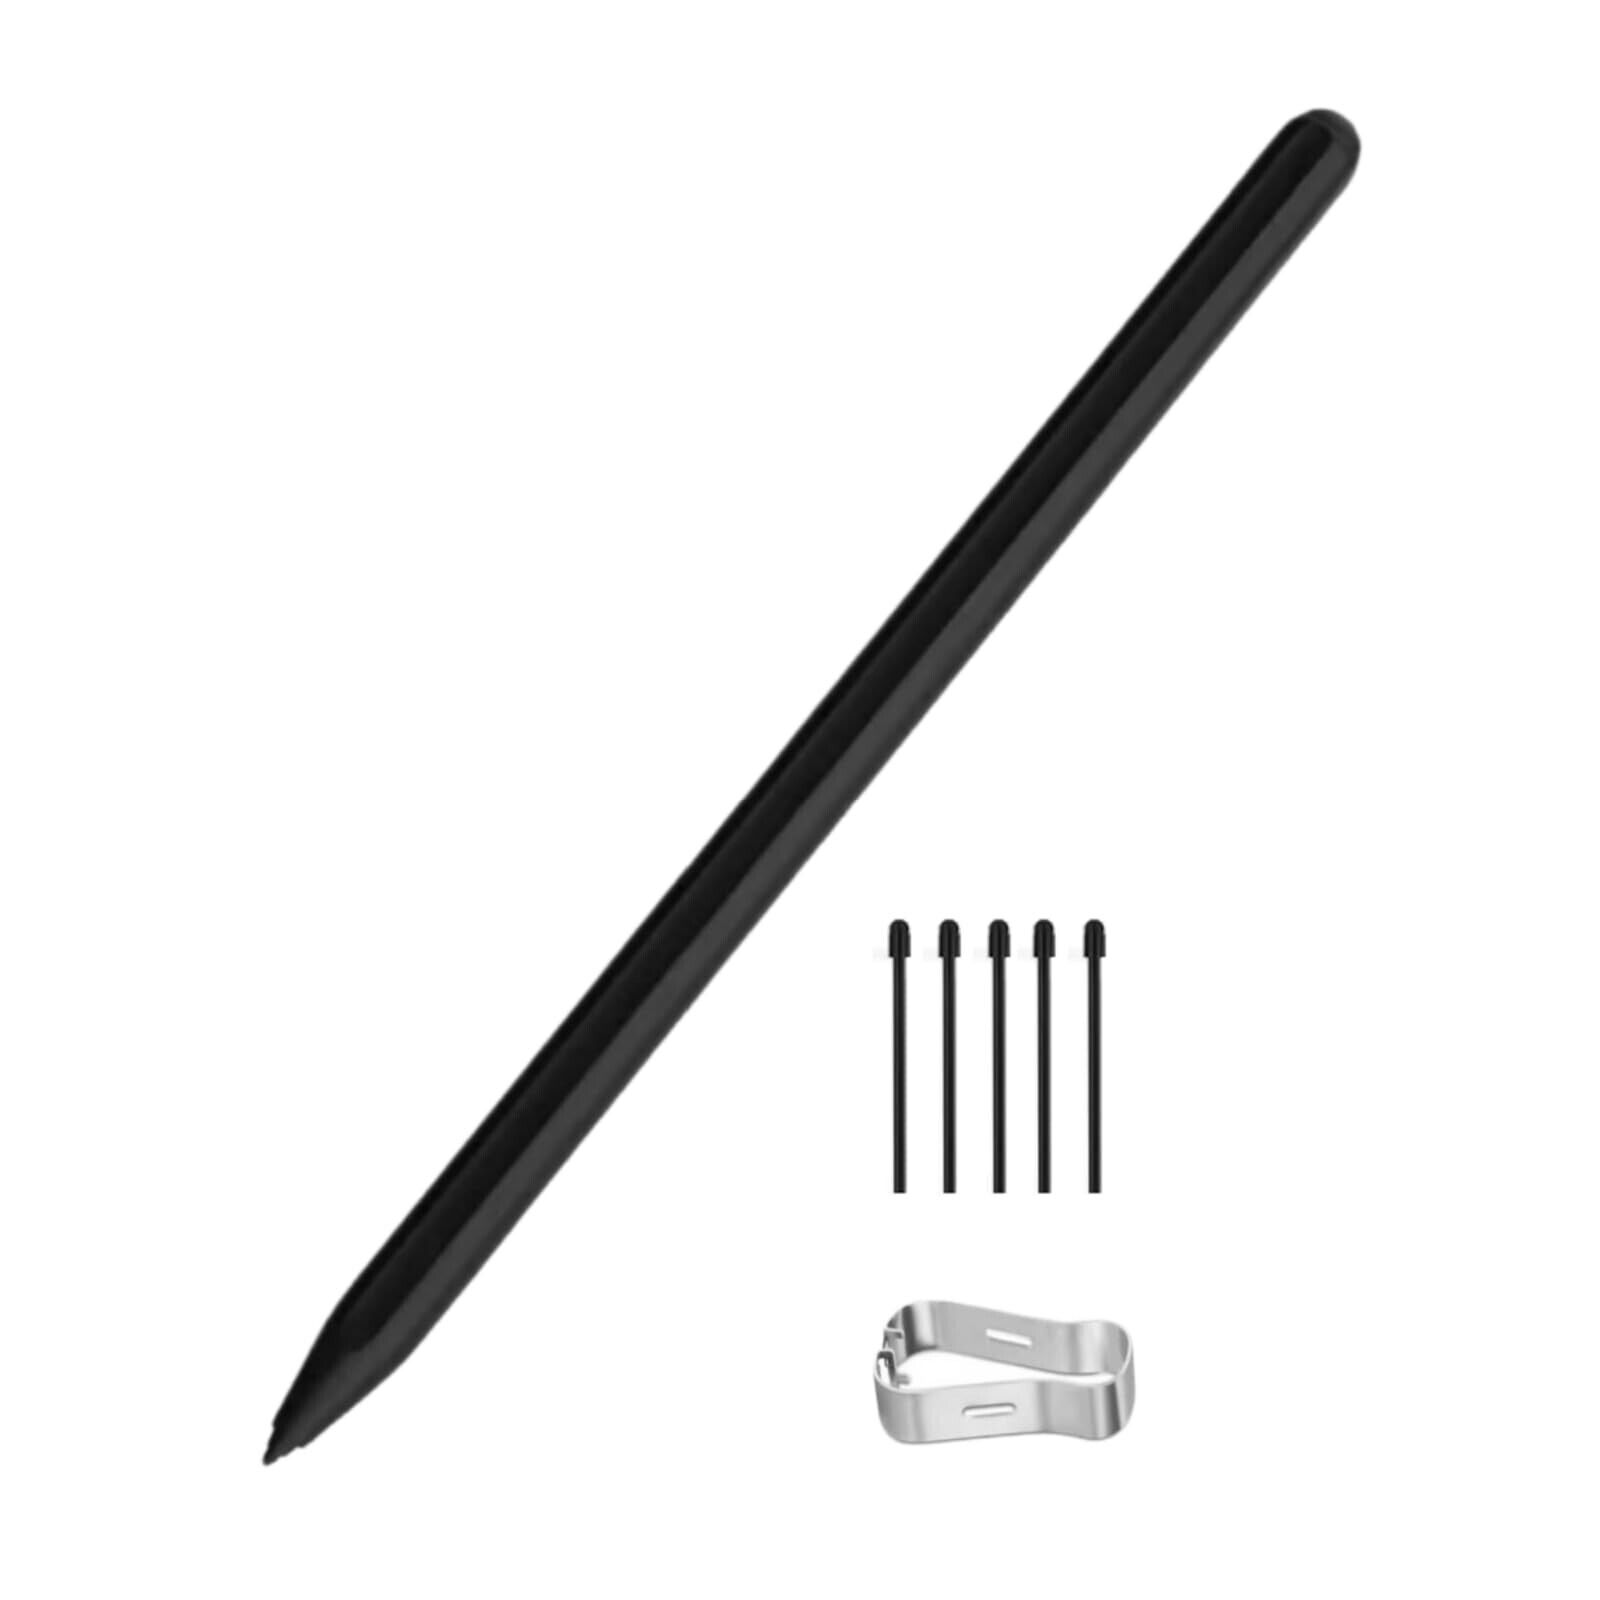 Marker Pen Replacement for Remarkable 2, Digital Eraser,4096 Pressure Sensiti...